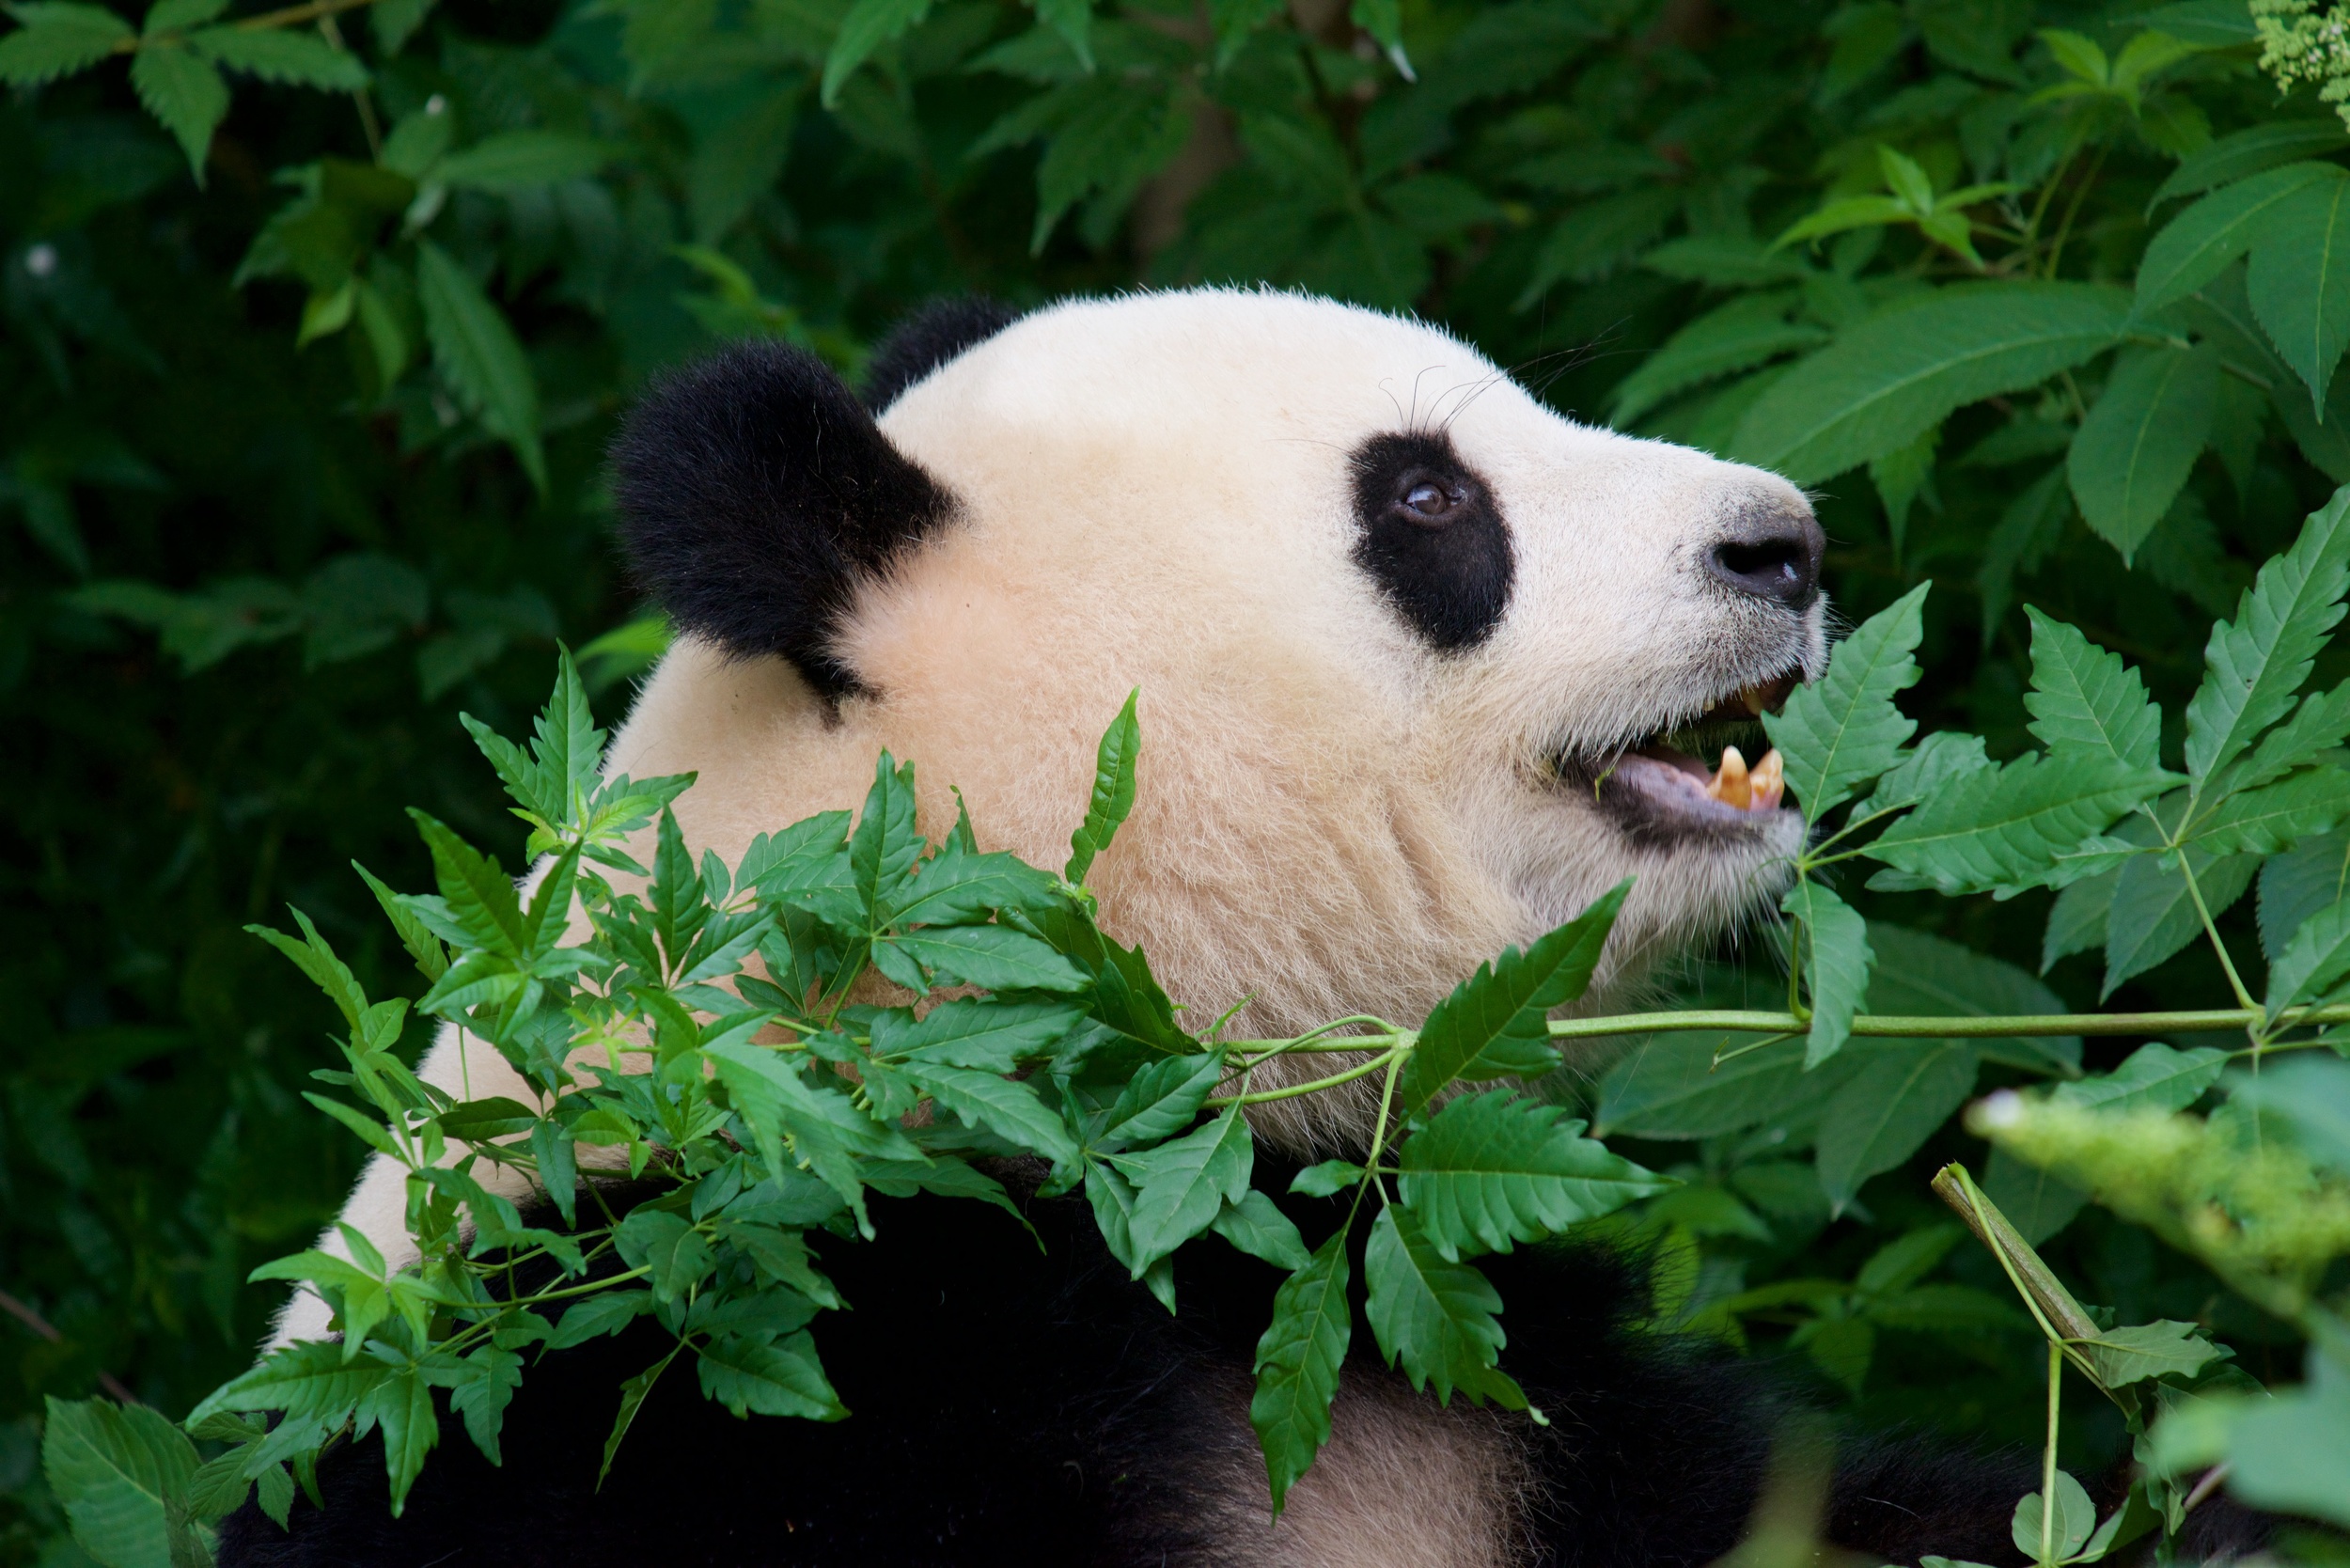  Giant panda,&nbsp;Chengdu Research Base of Giant Panda Breeding,&nbsp;Chengdu 